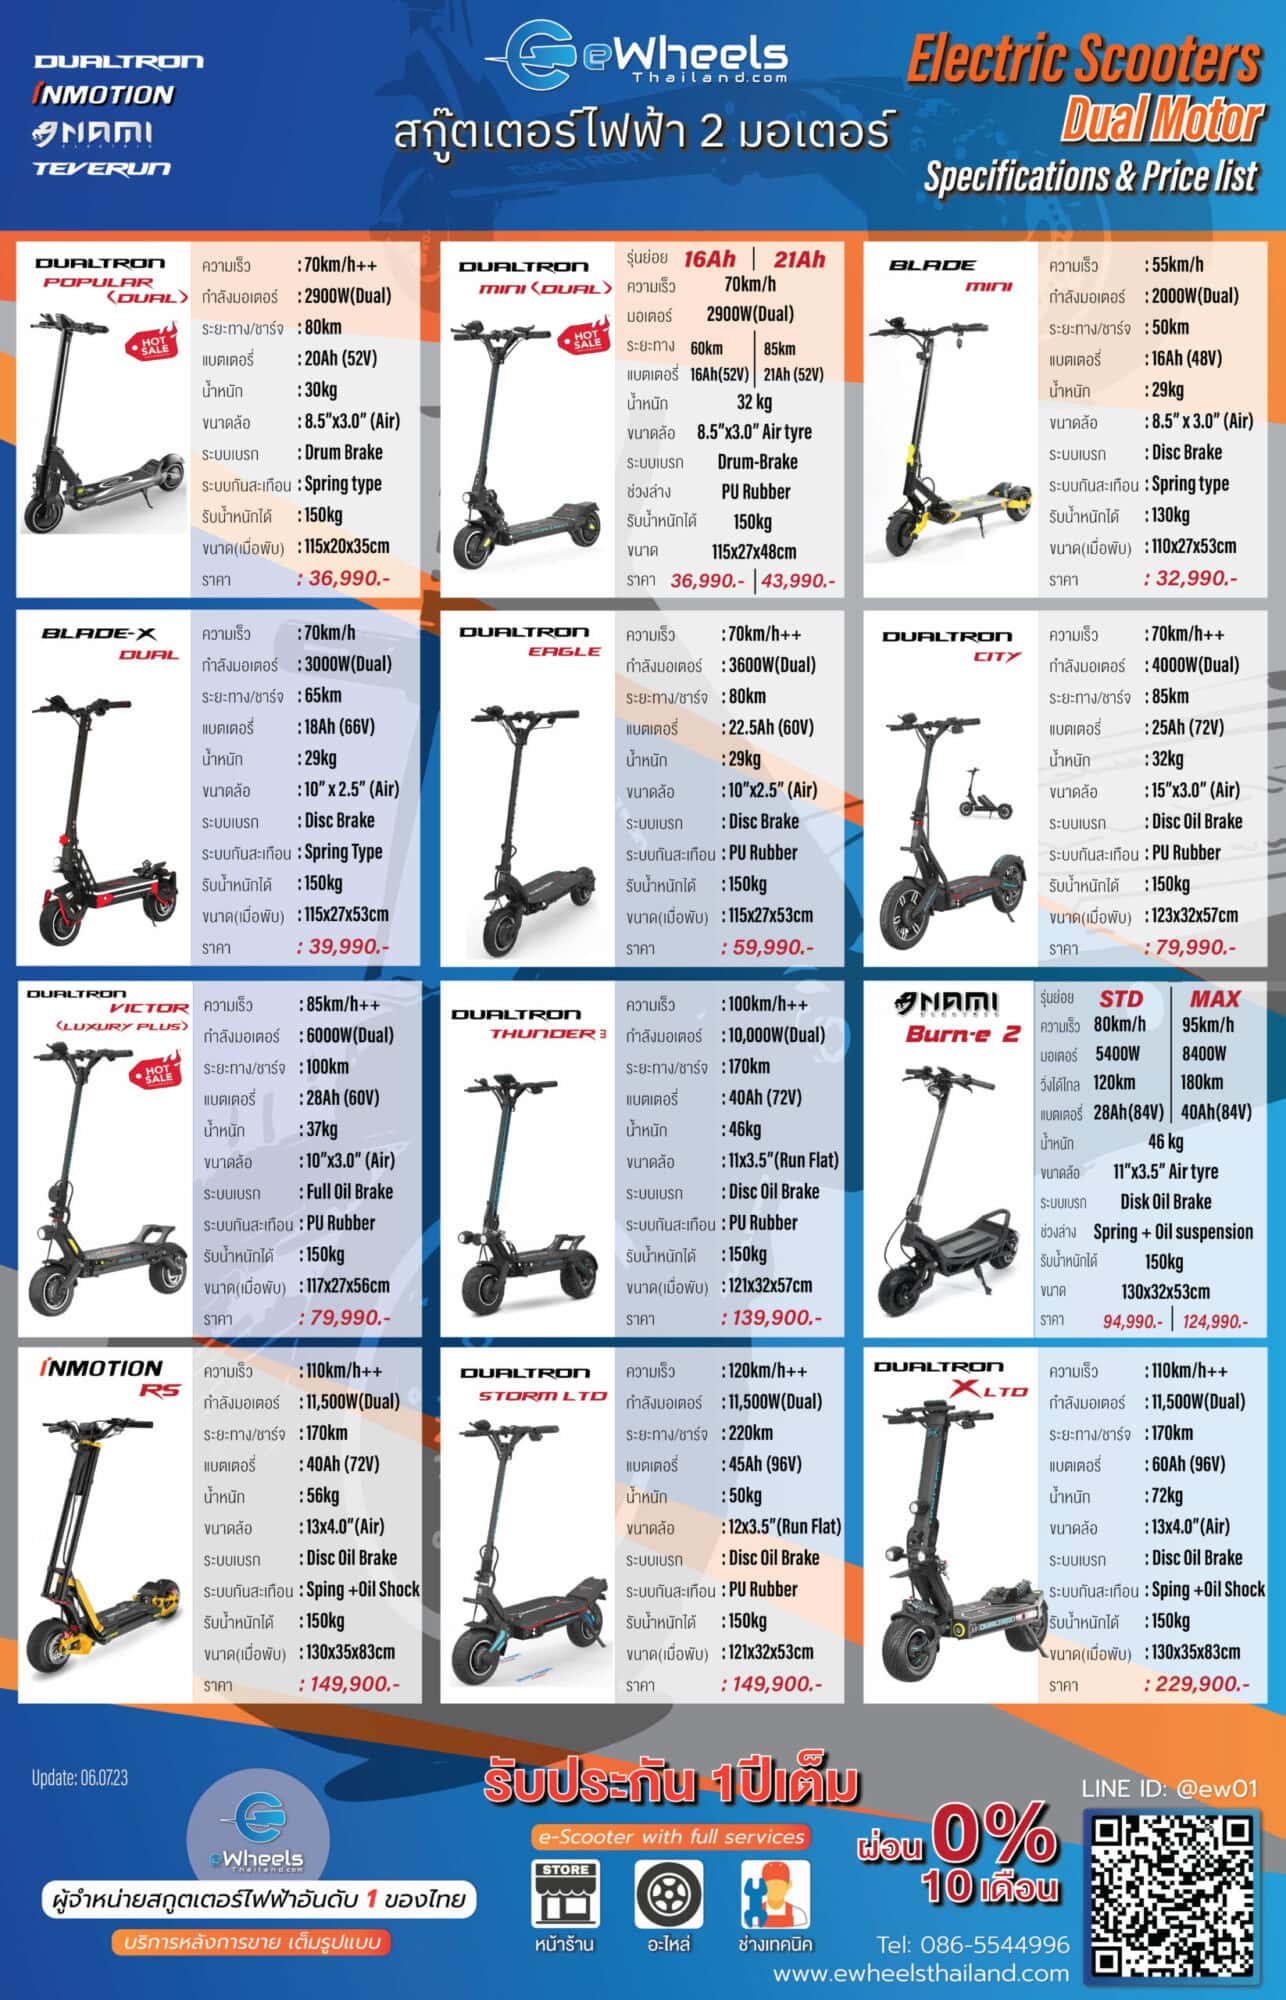 Electric Scooter price list - eWheels Thailand